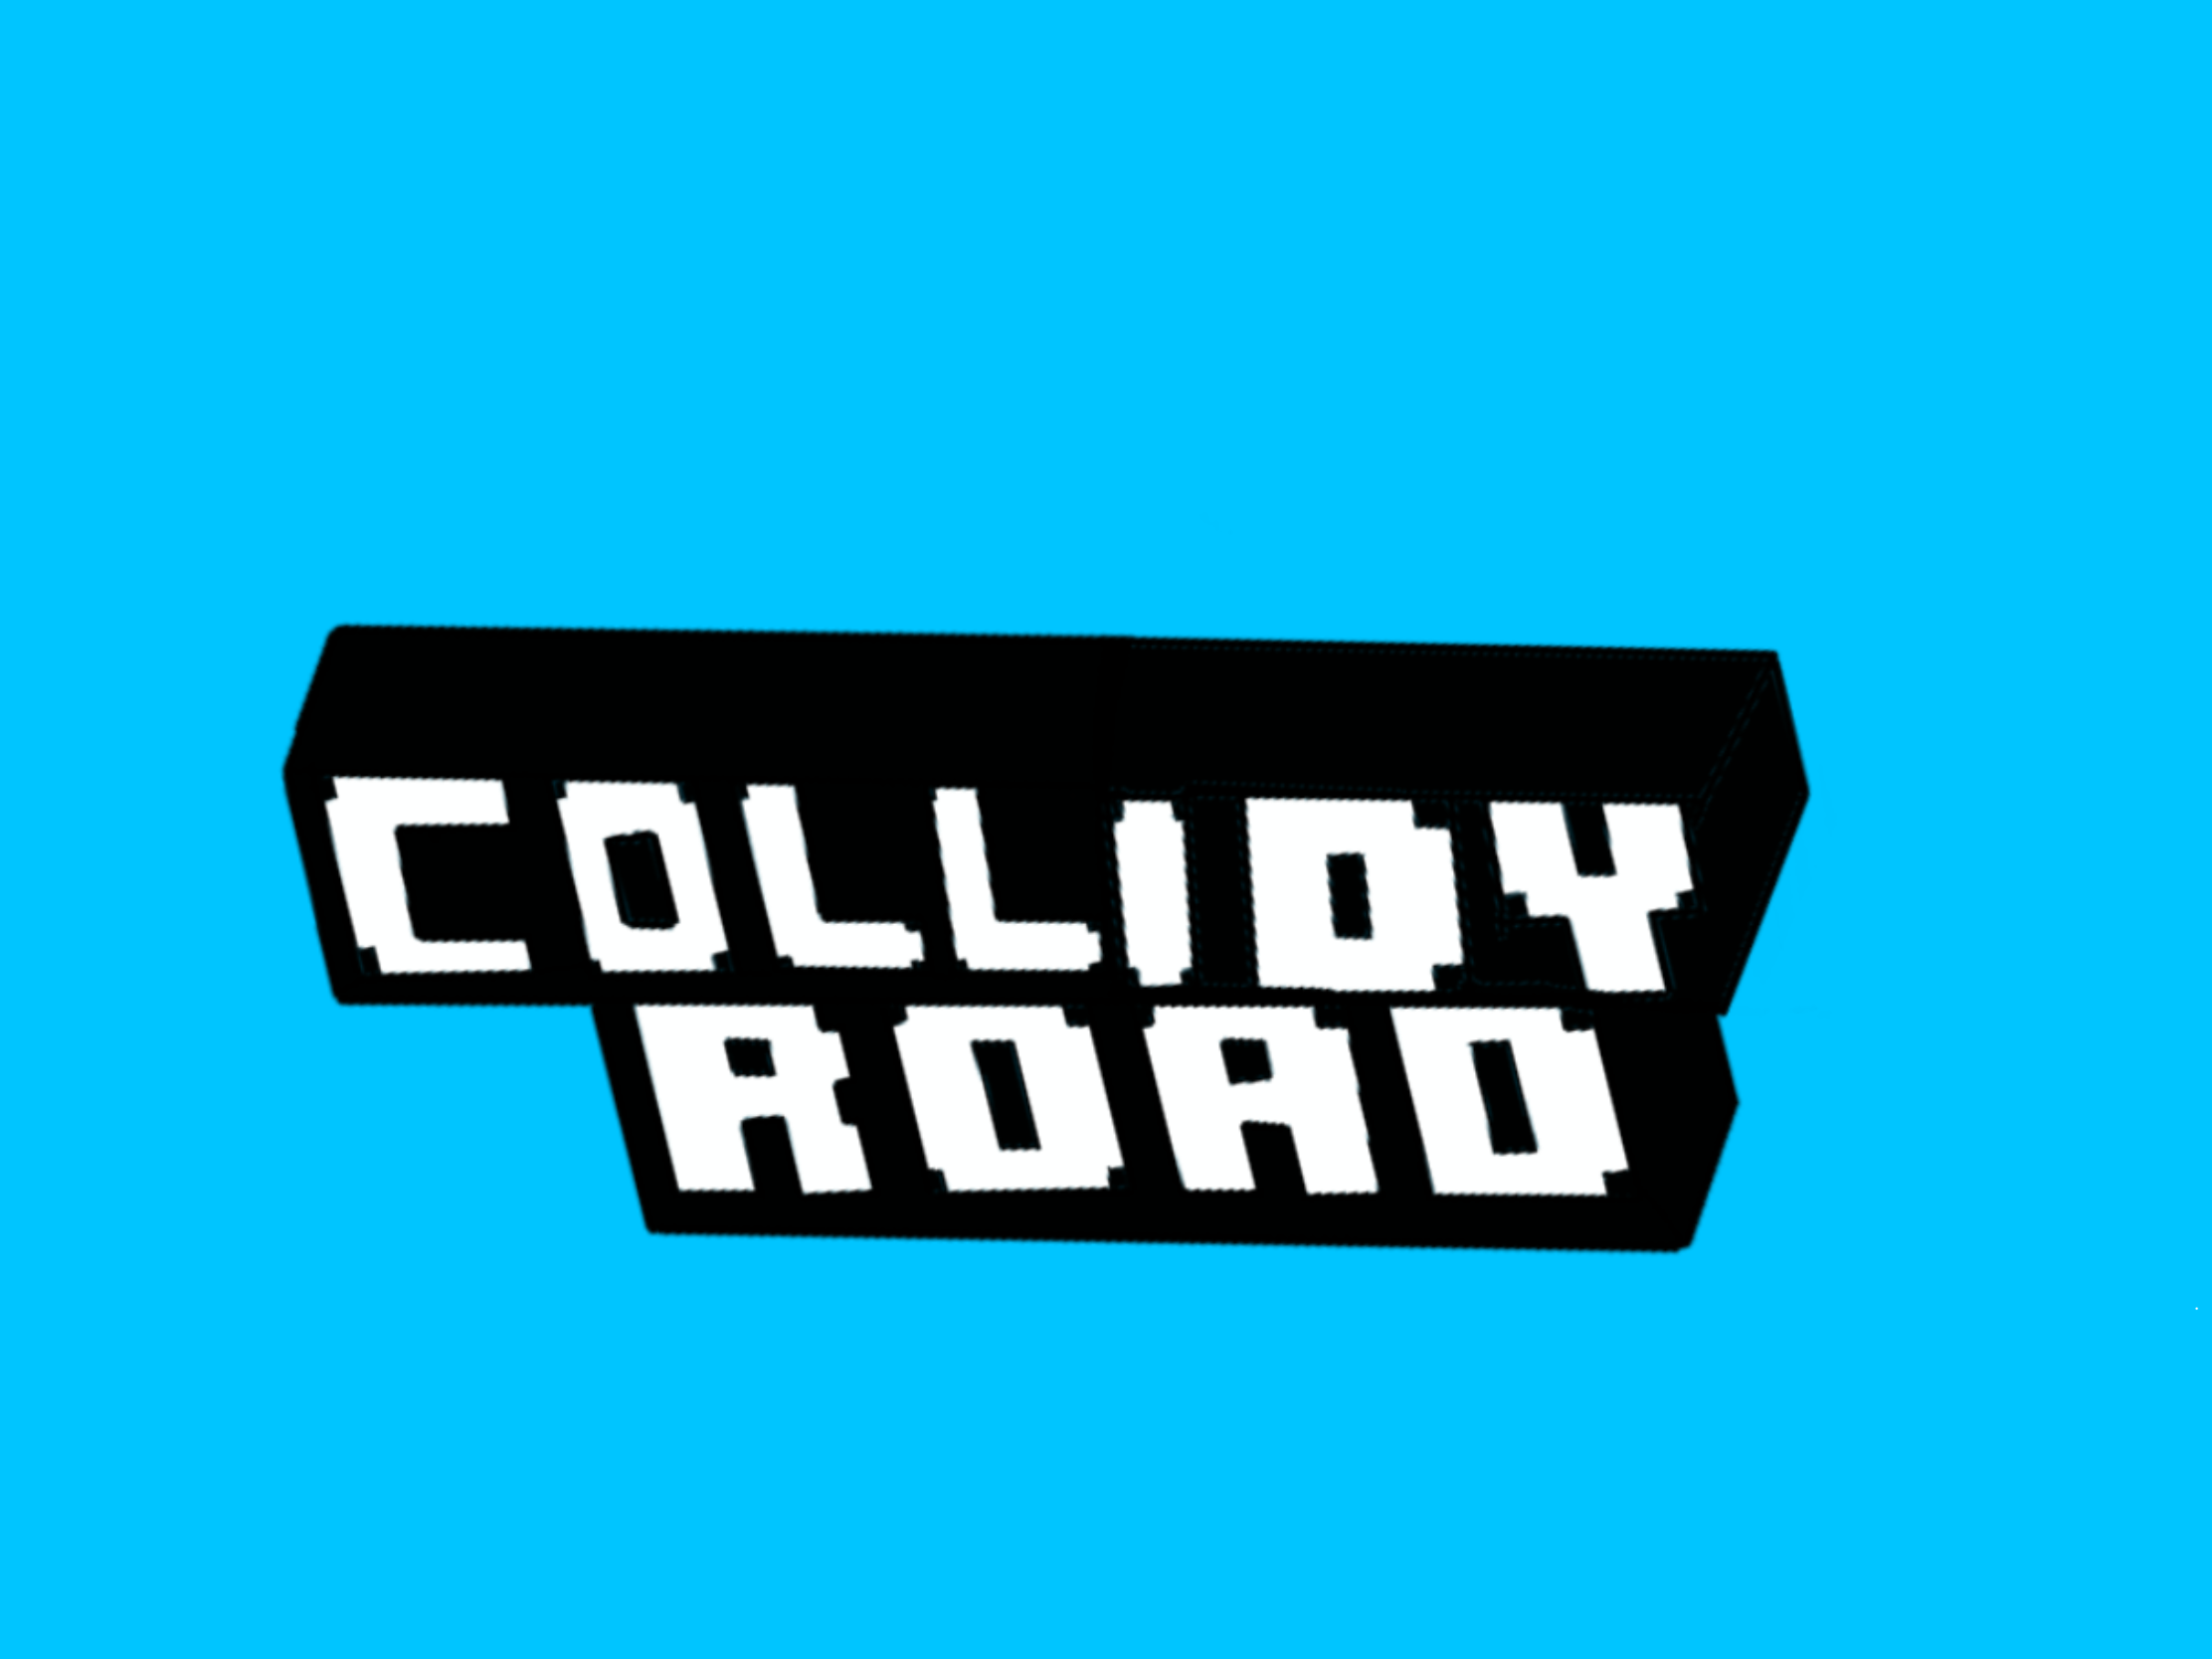 Collidy Road